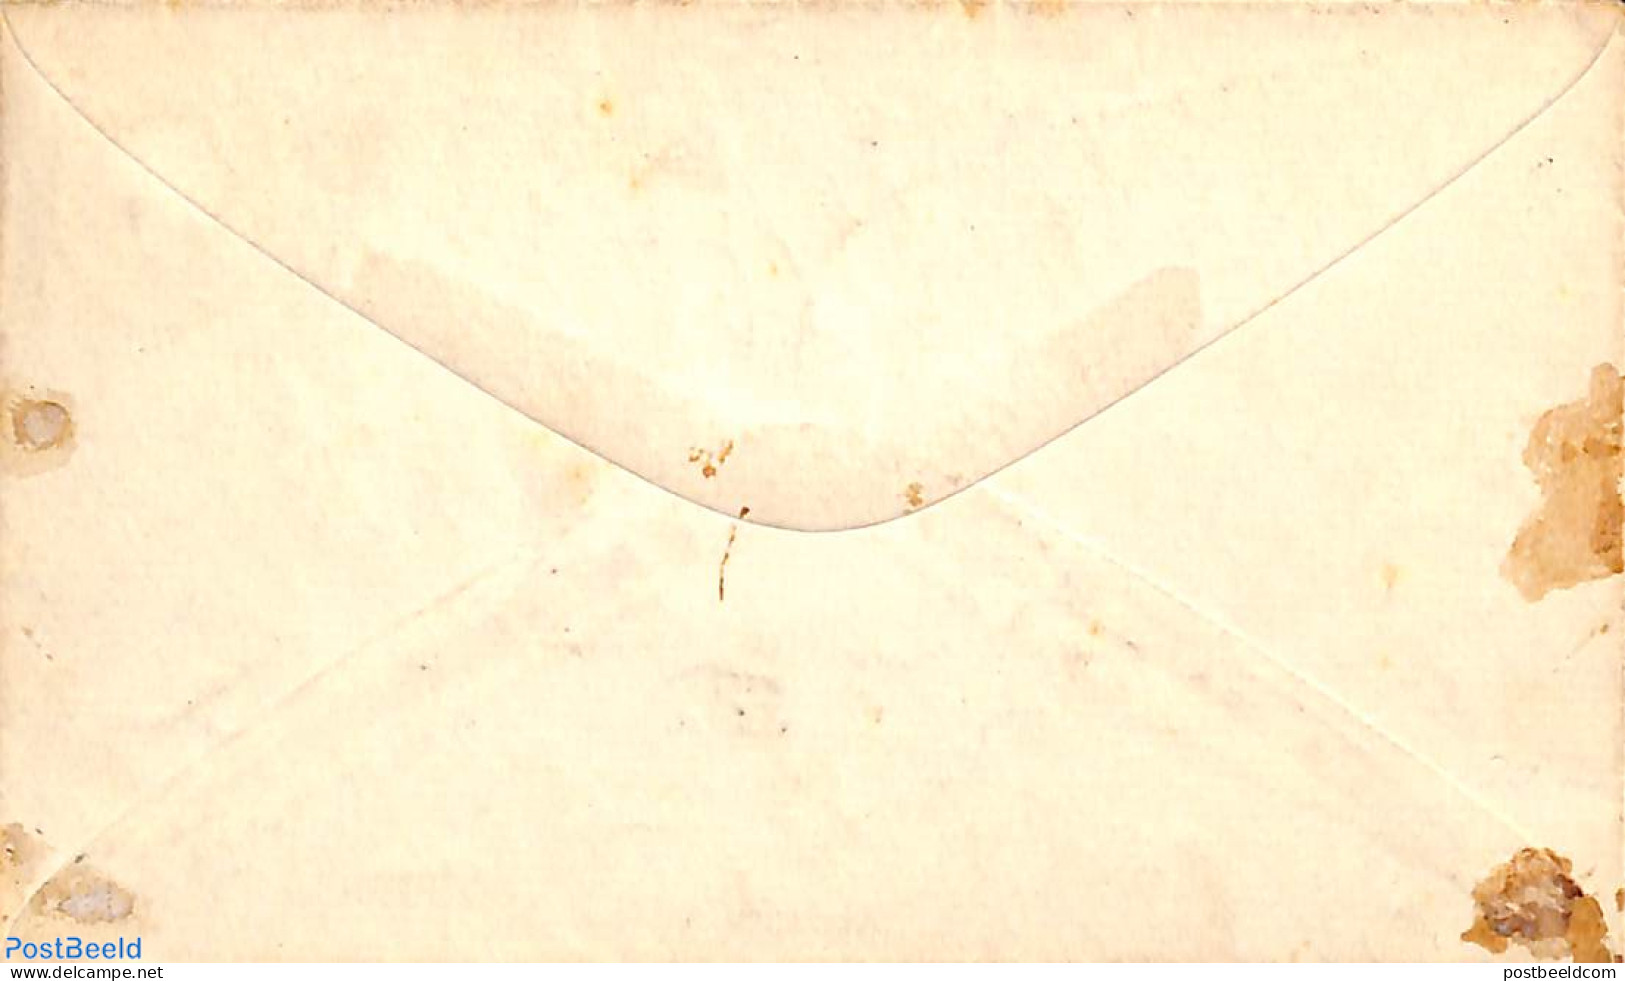 Canada 1860 Envelope 10c, Unused Postal Stationary - Covers & Documents